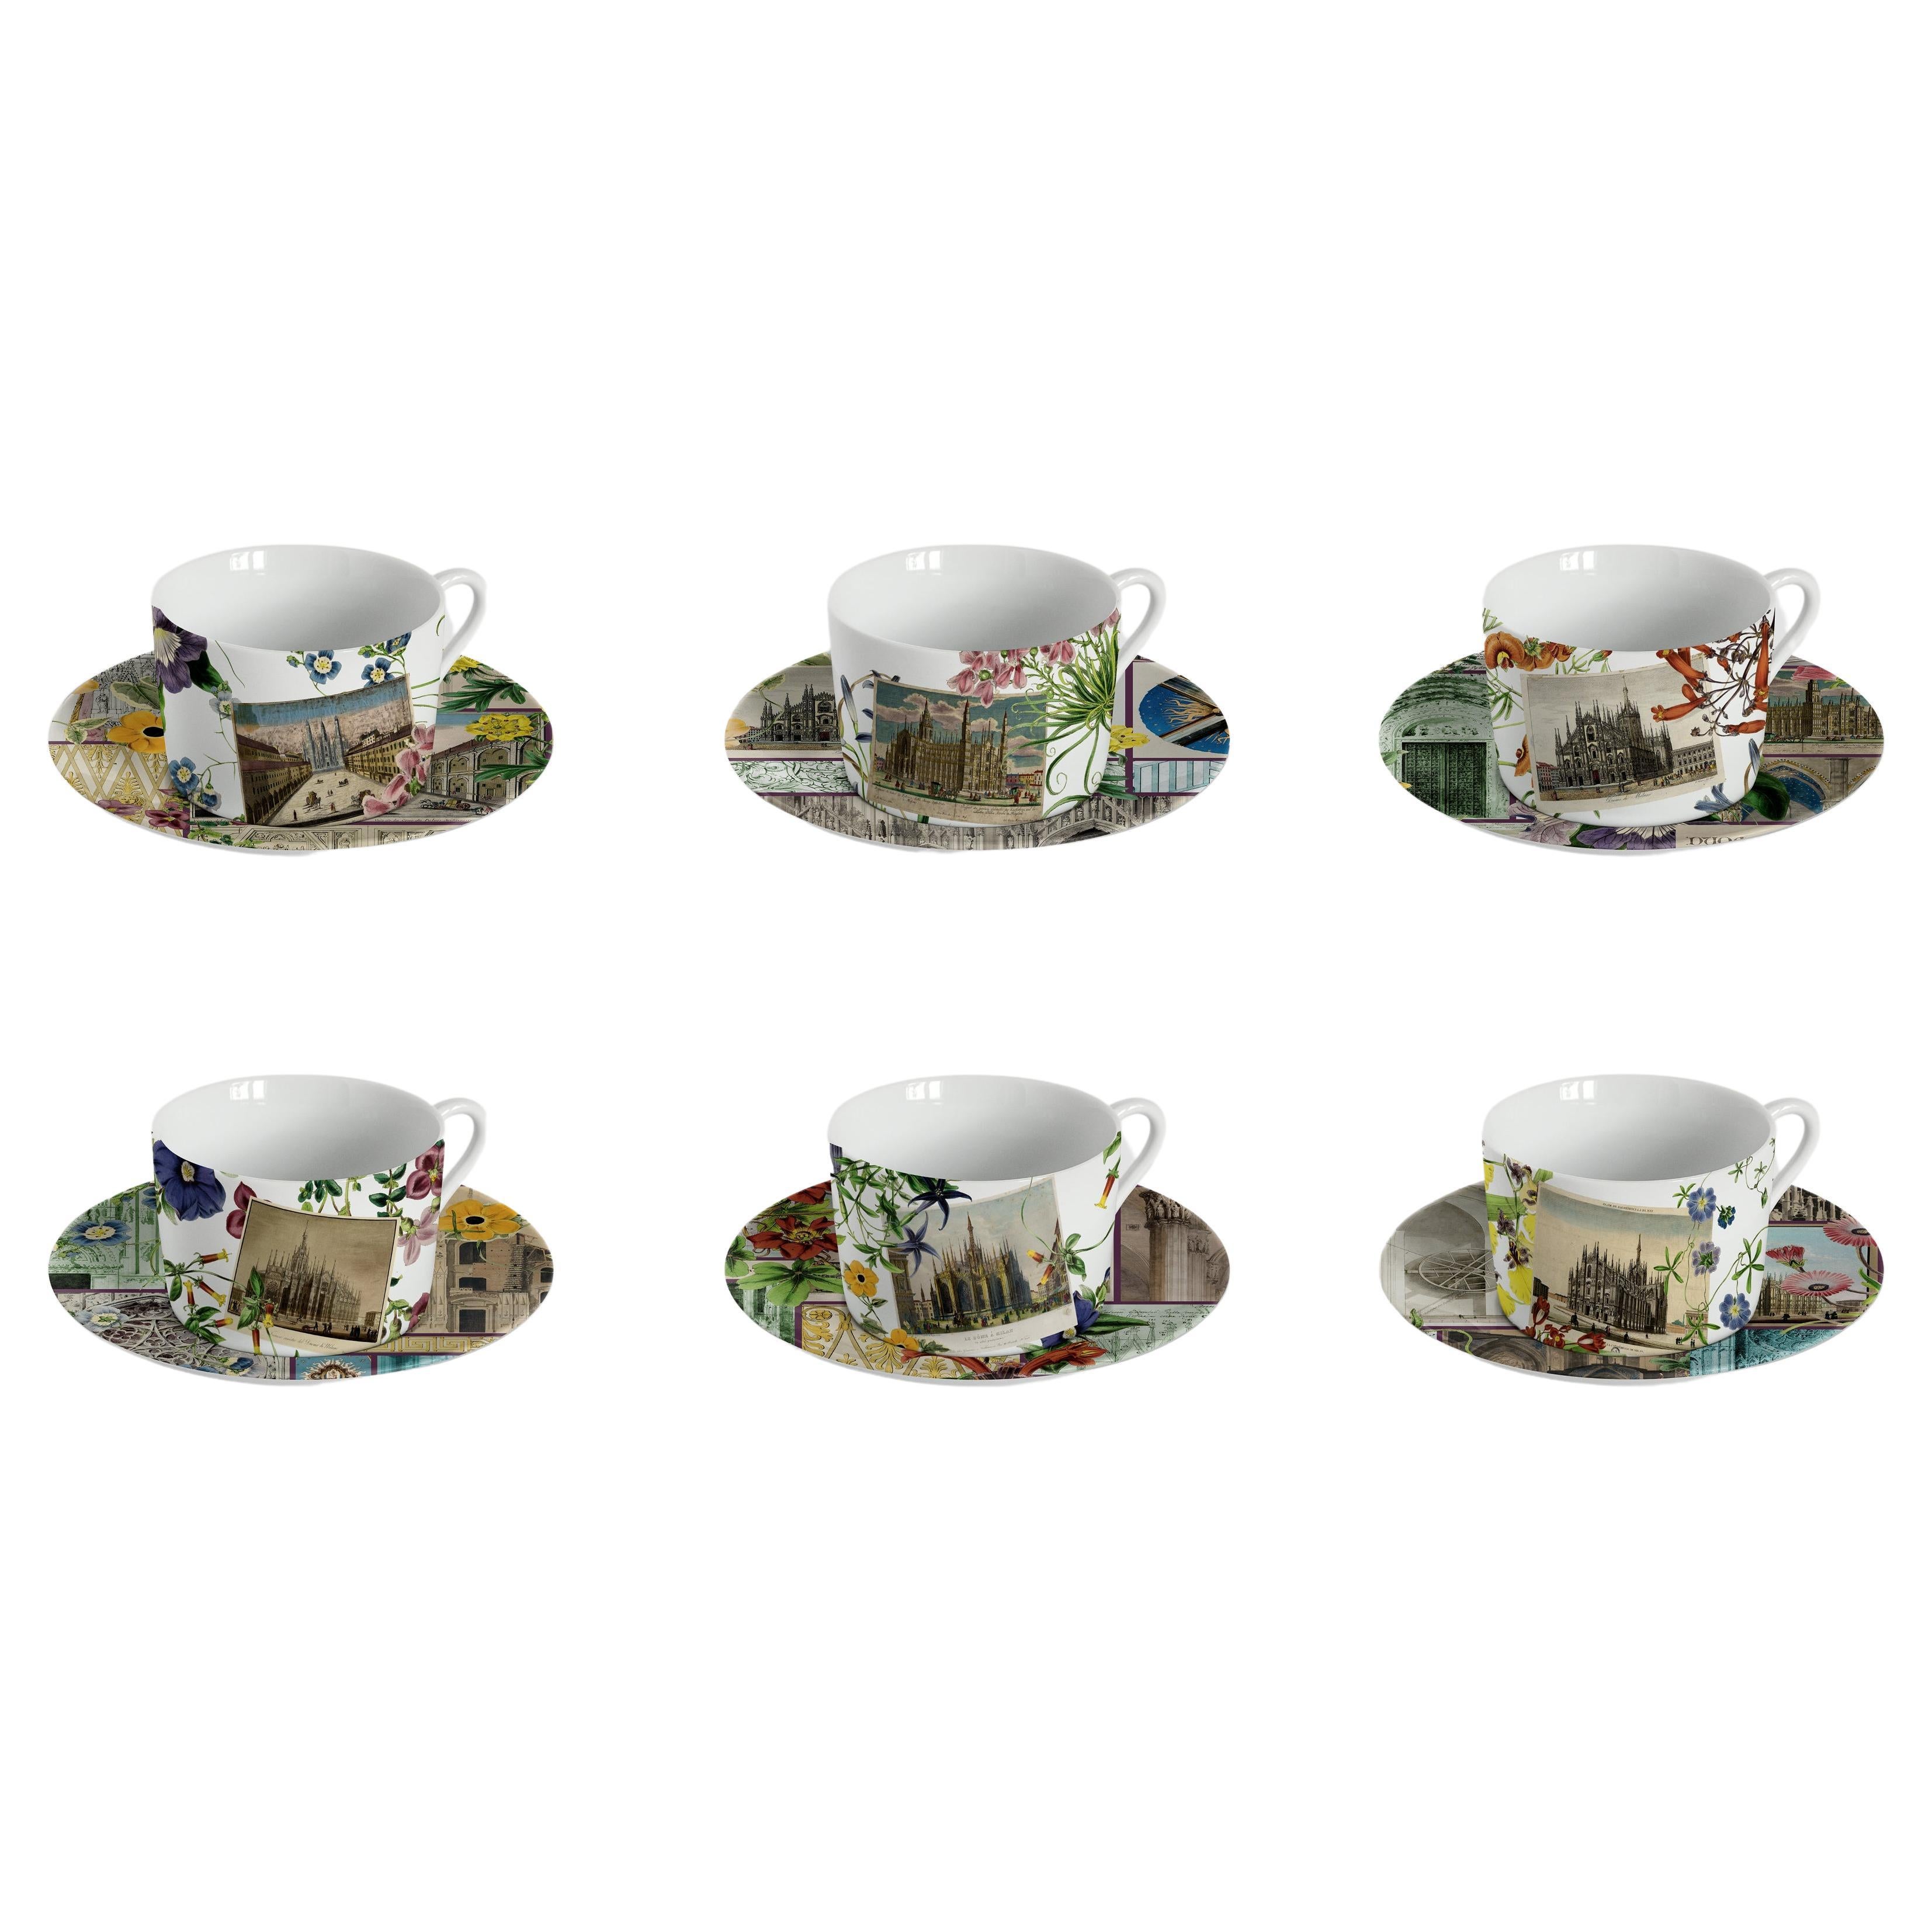 La storia Infinita, Six Contemporary Decorated Tea Cups with Plates